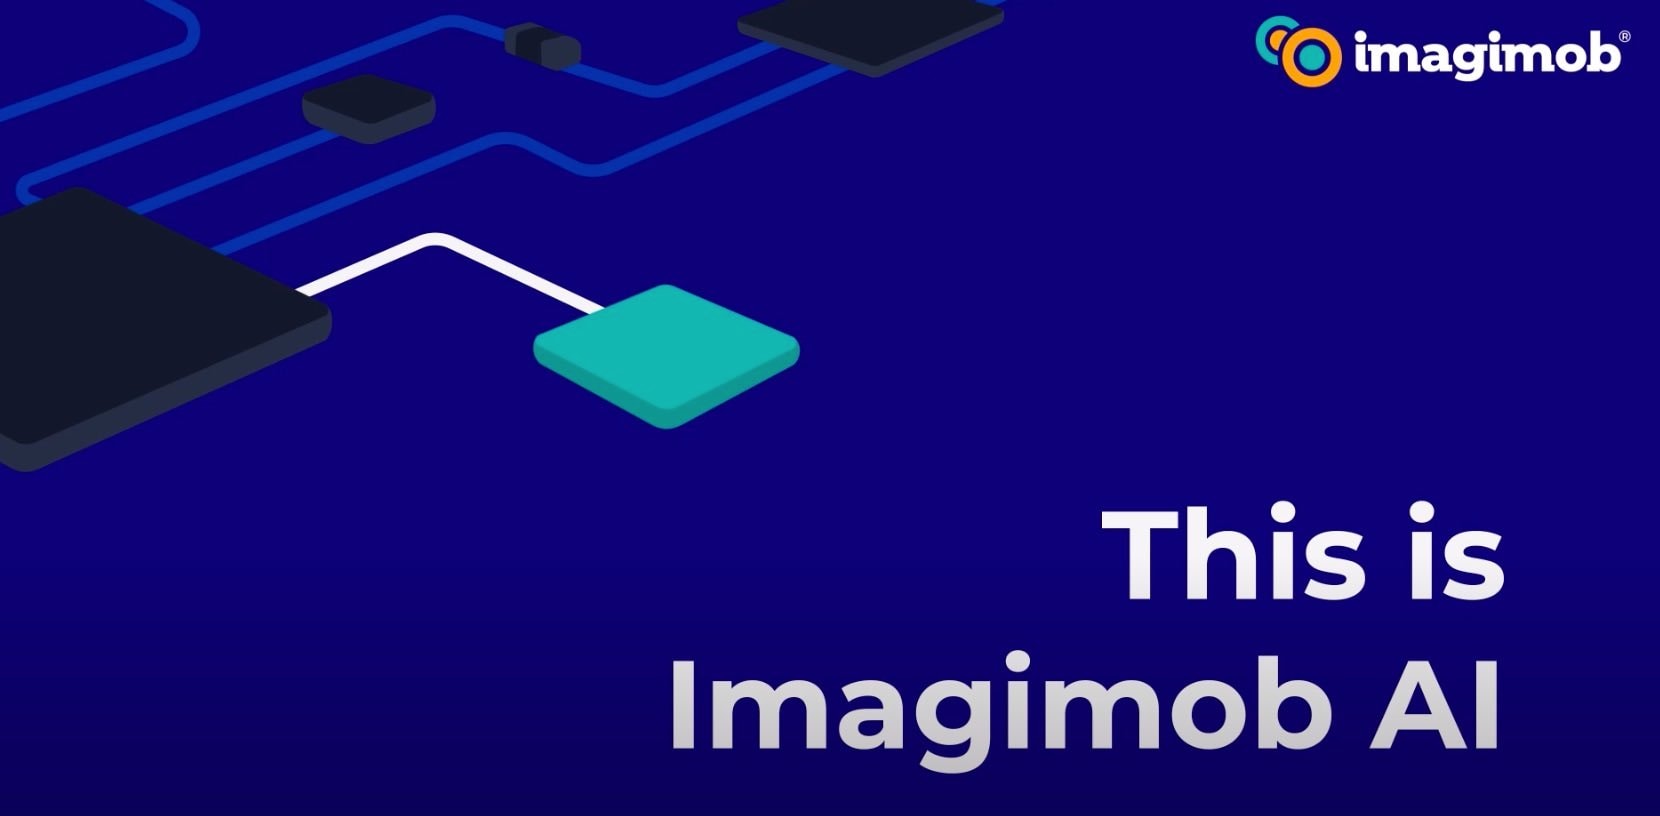 This is Imagimob AI